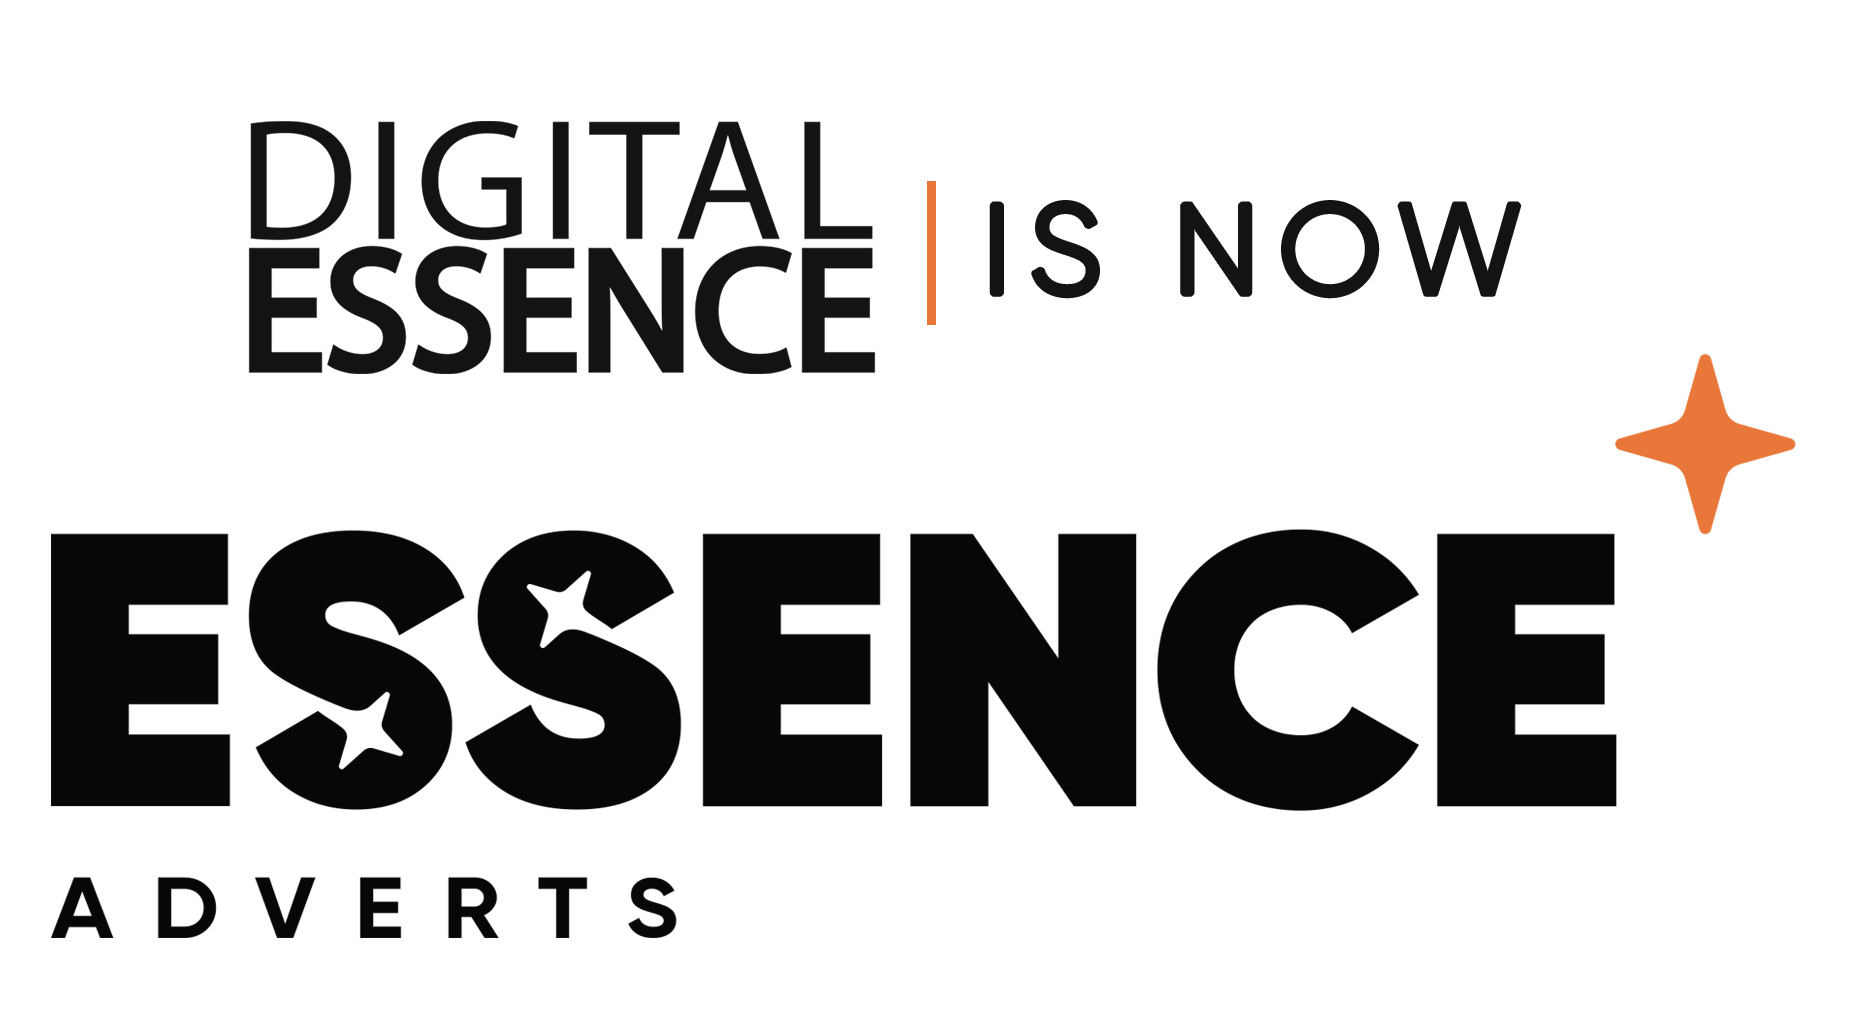 Digital Essence is now Essence adverts